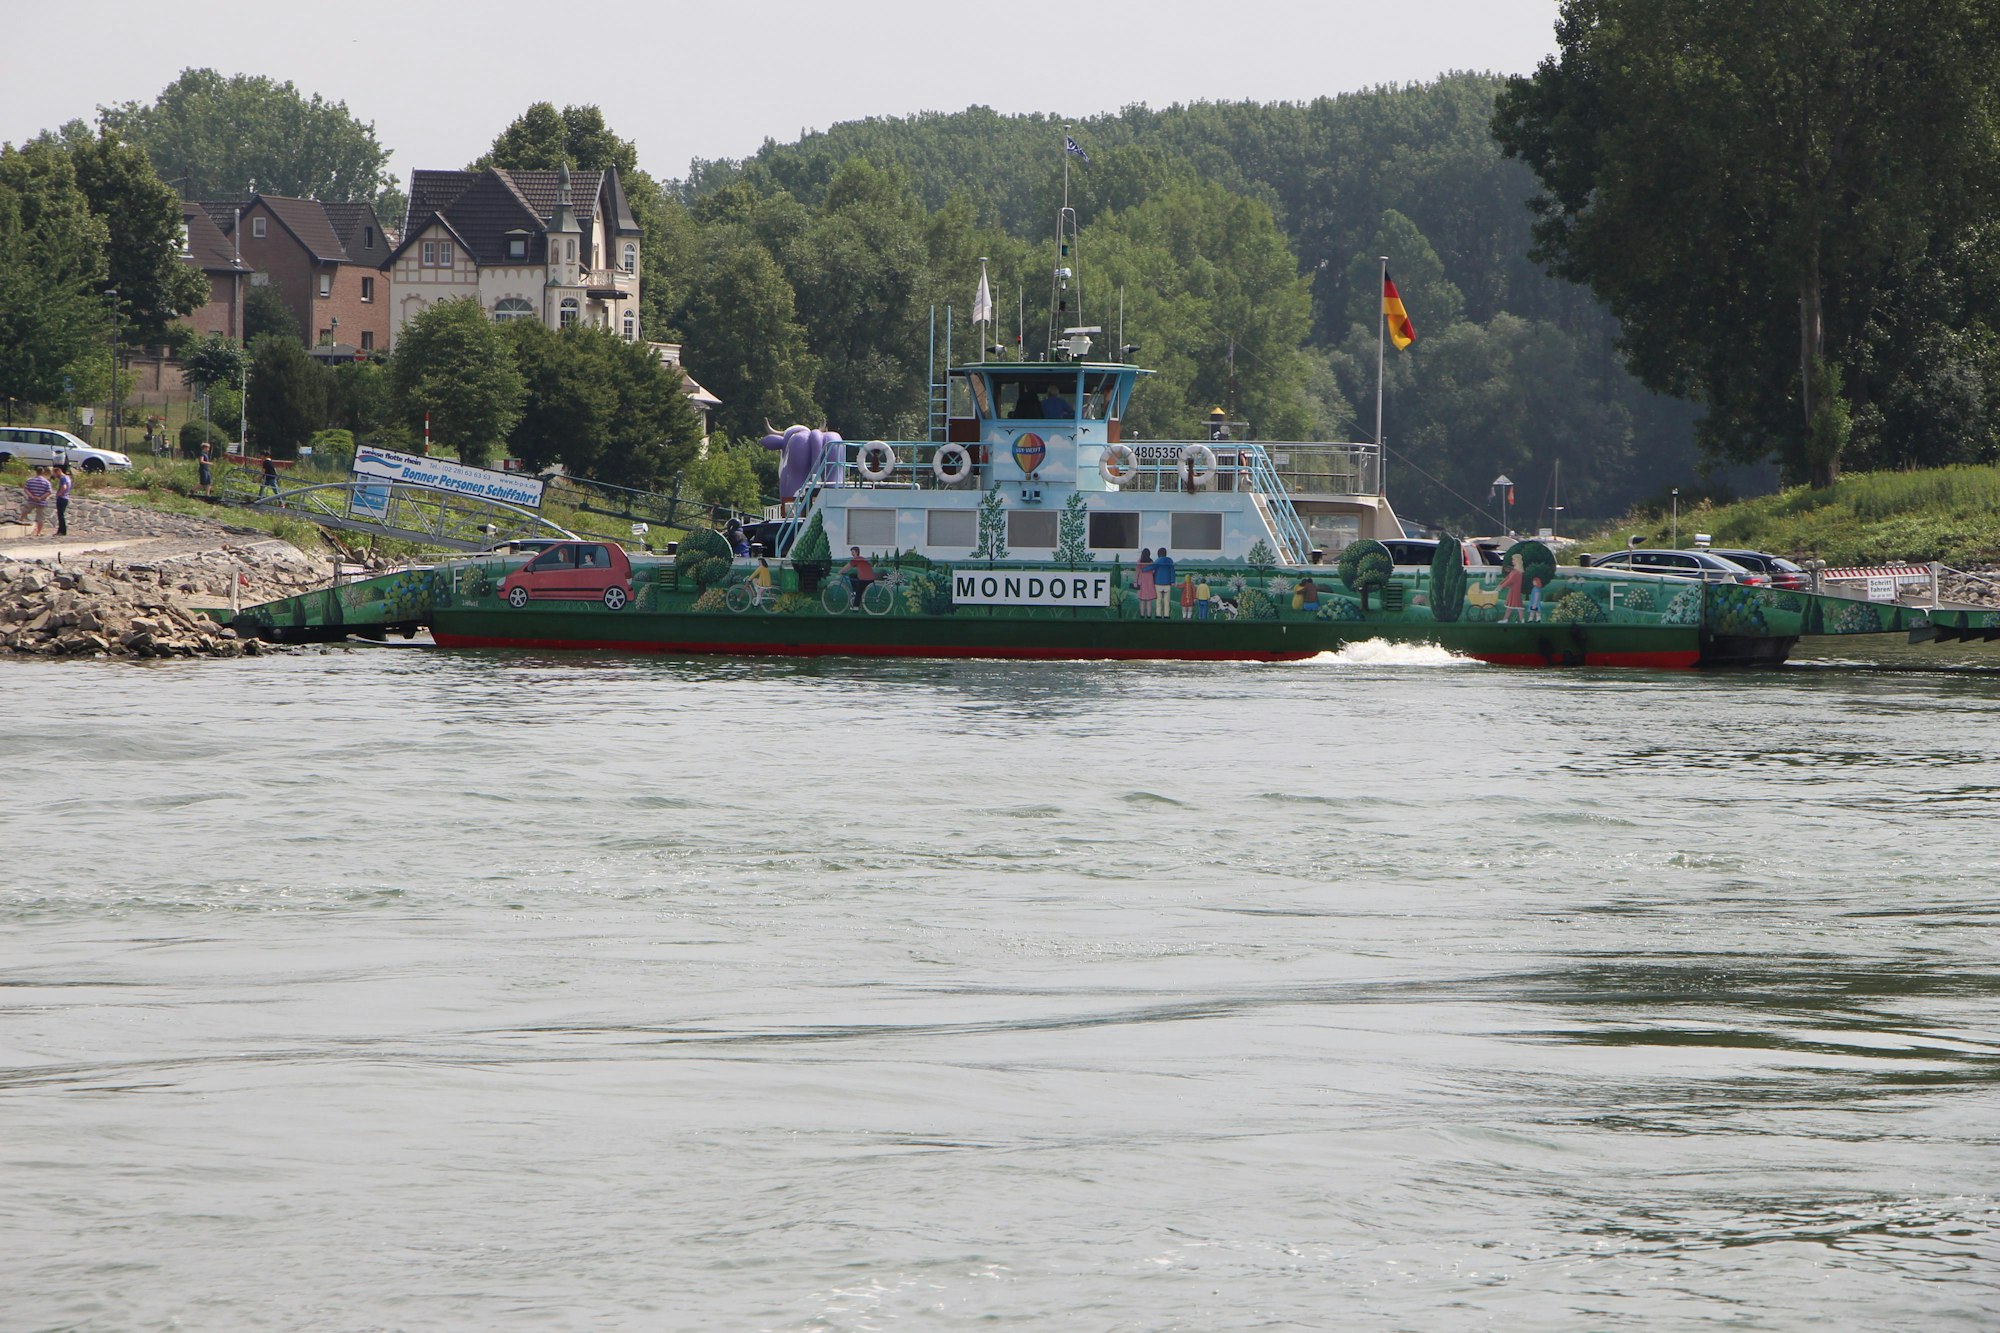 Mondorfer Rheinfähre